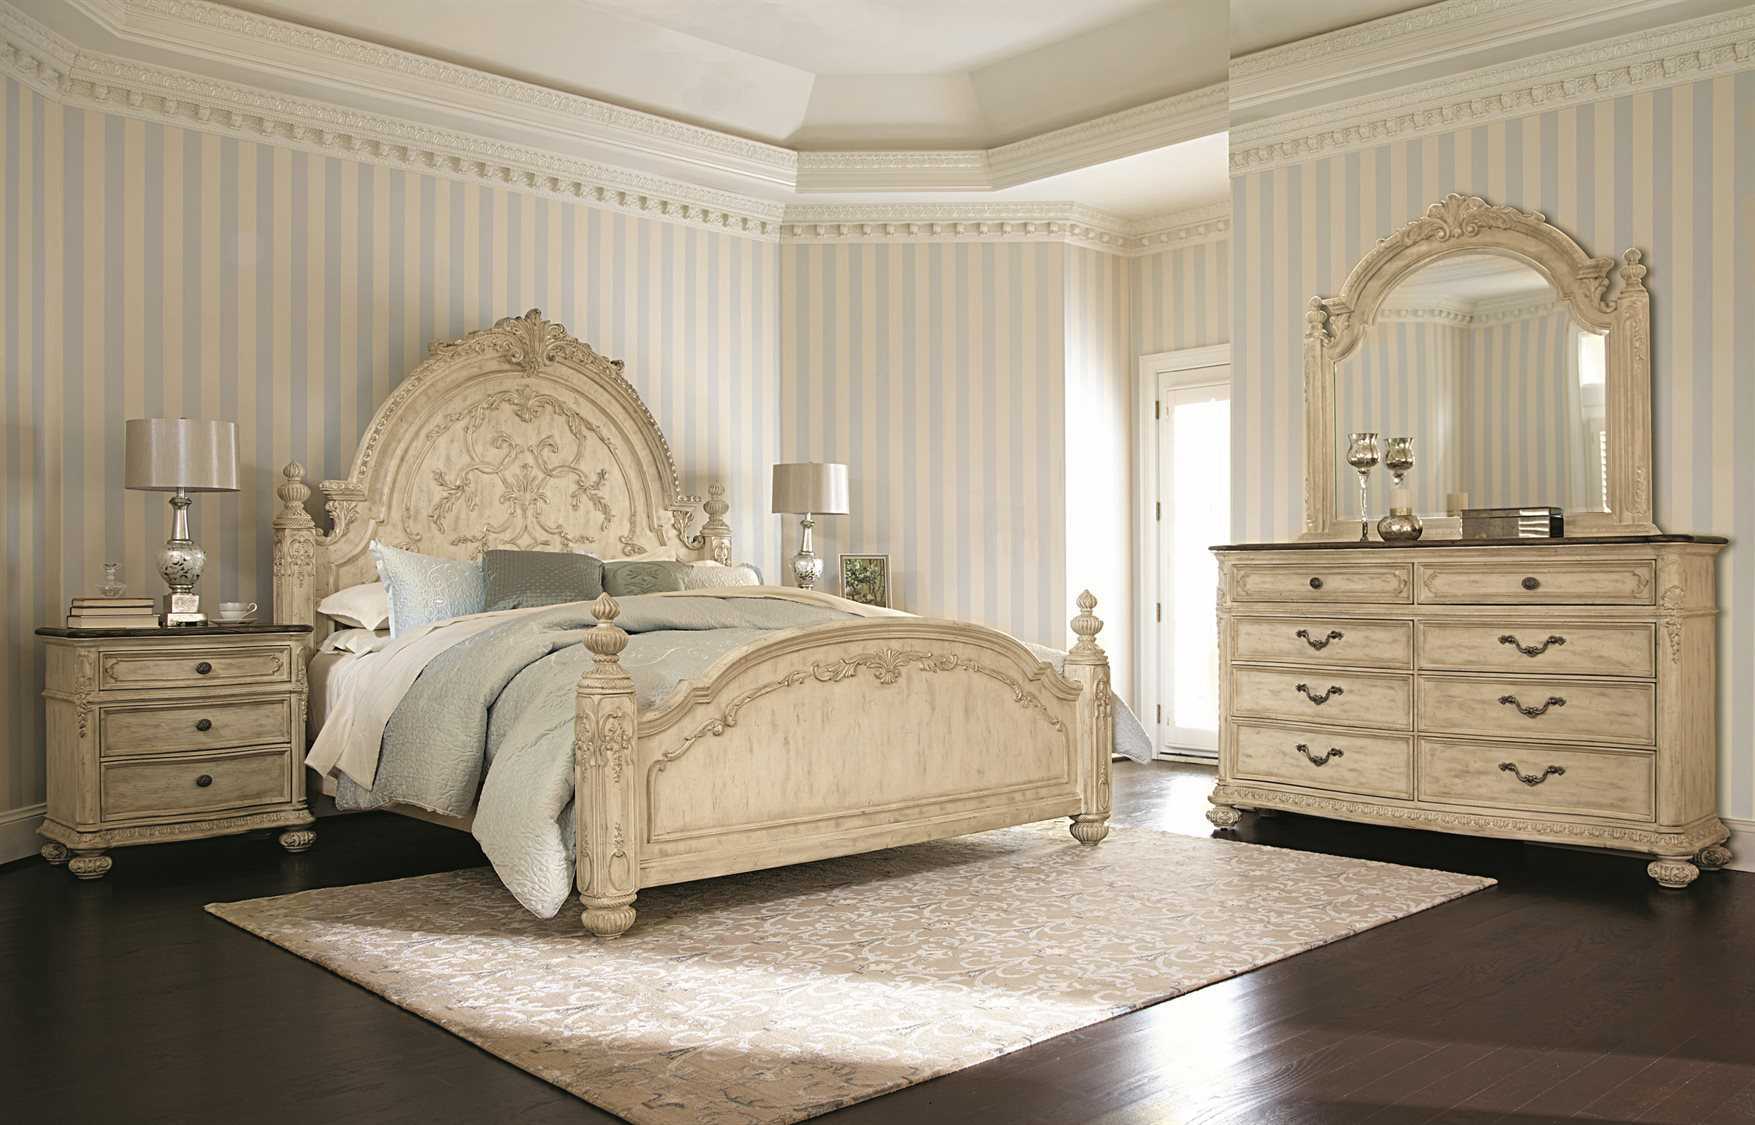 jessica mcclintock master bedroom furniture